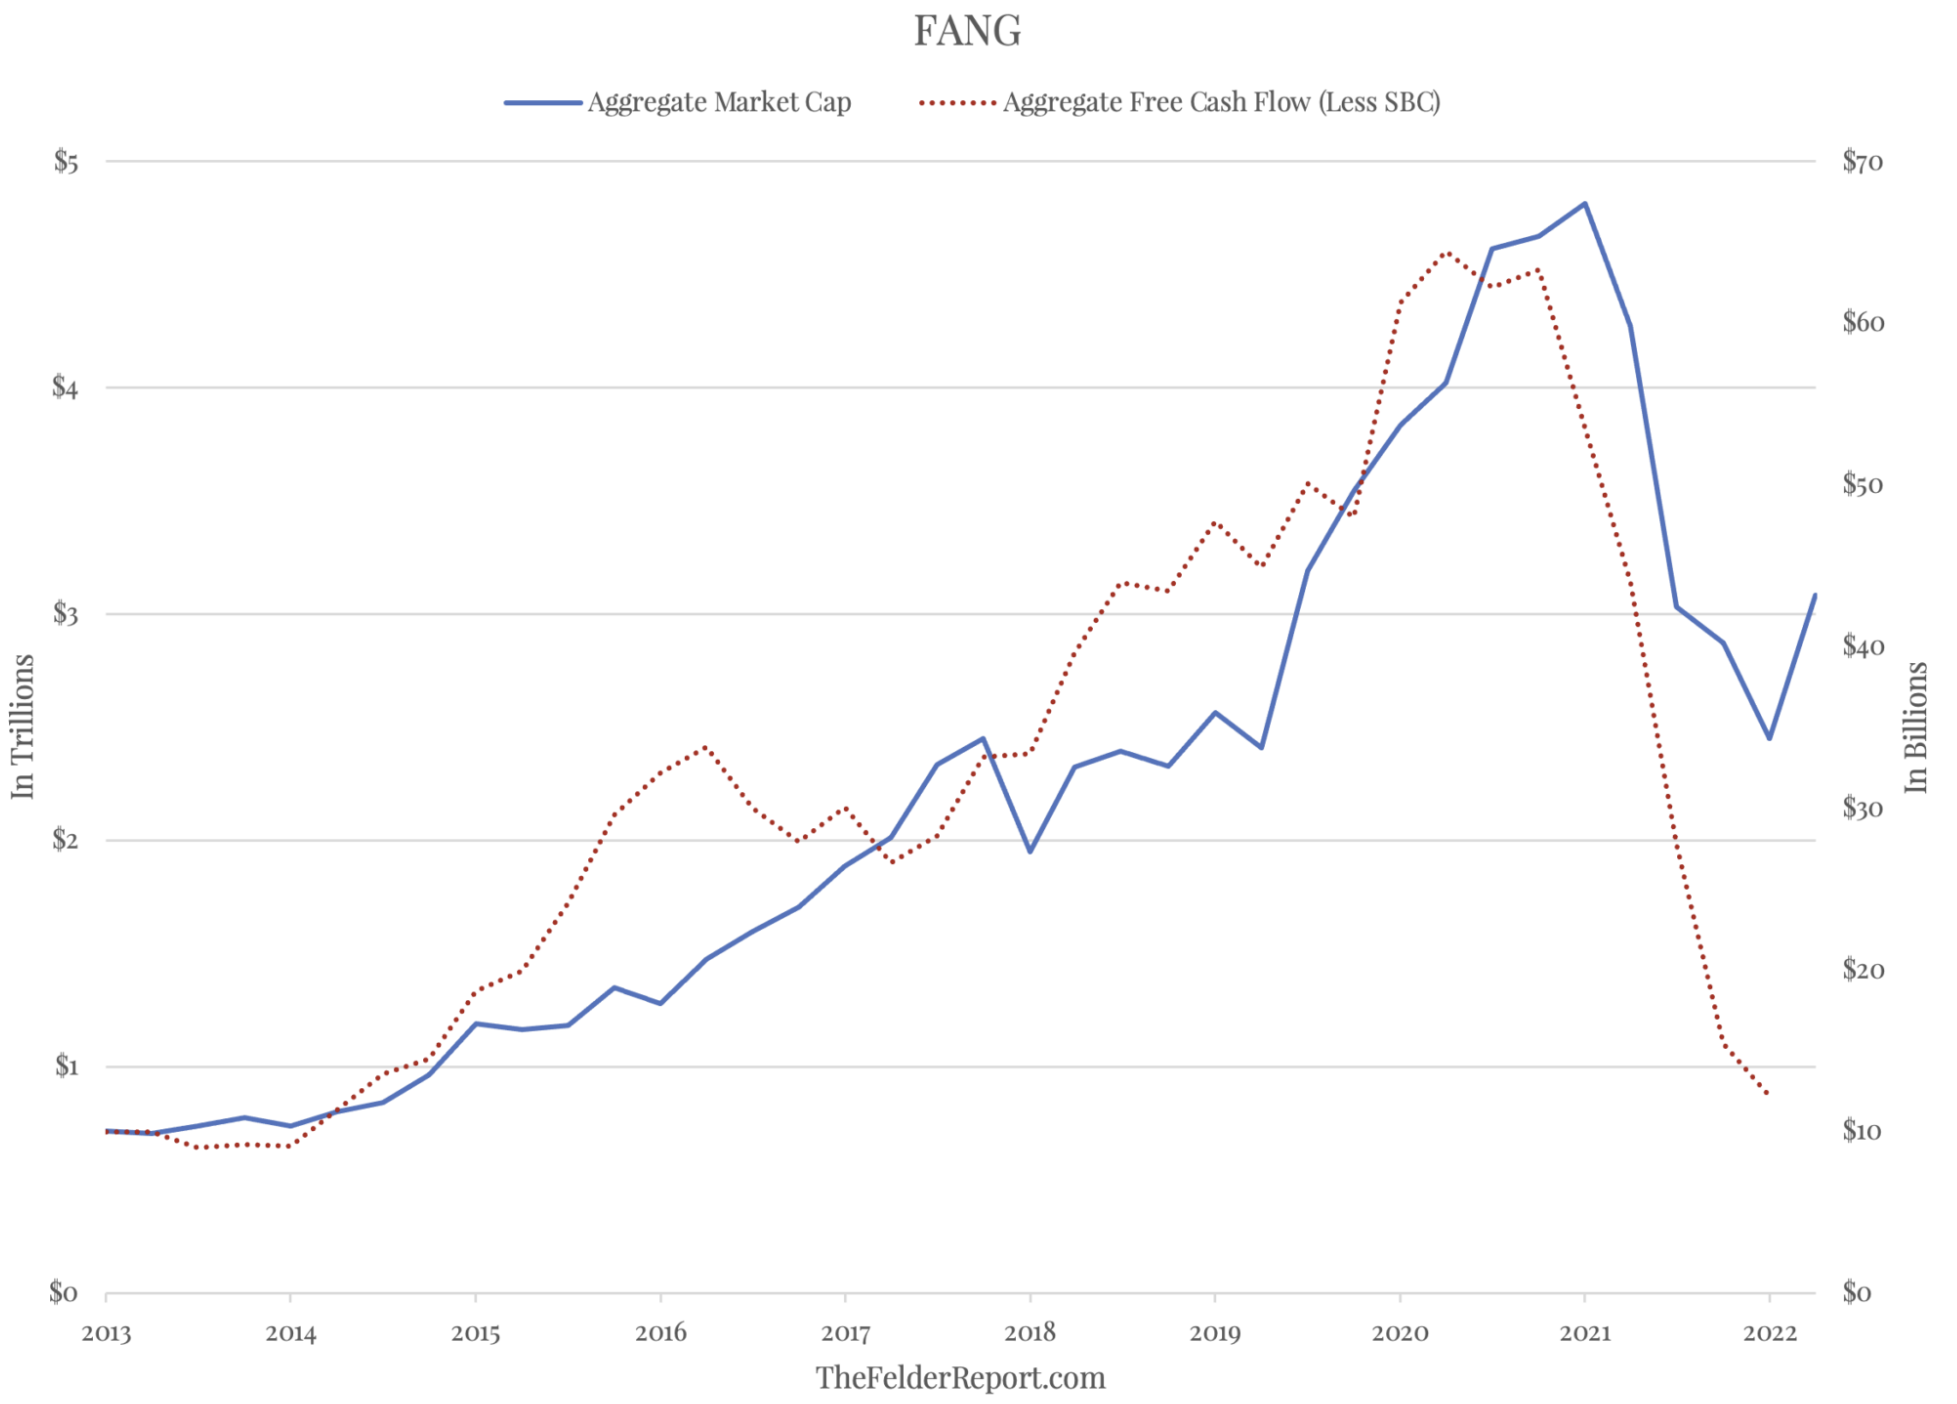 FANG Aggregate Market Cap Vs. Free Cash Flow